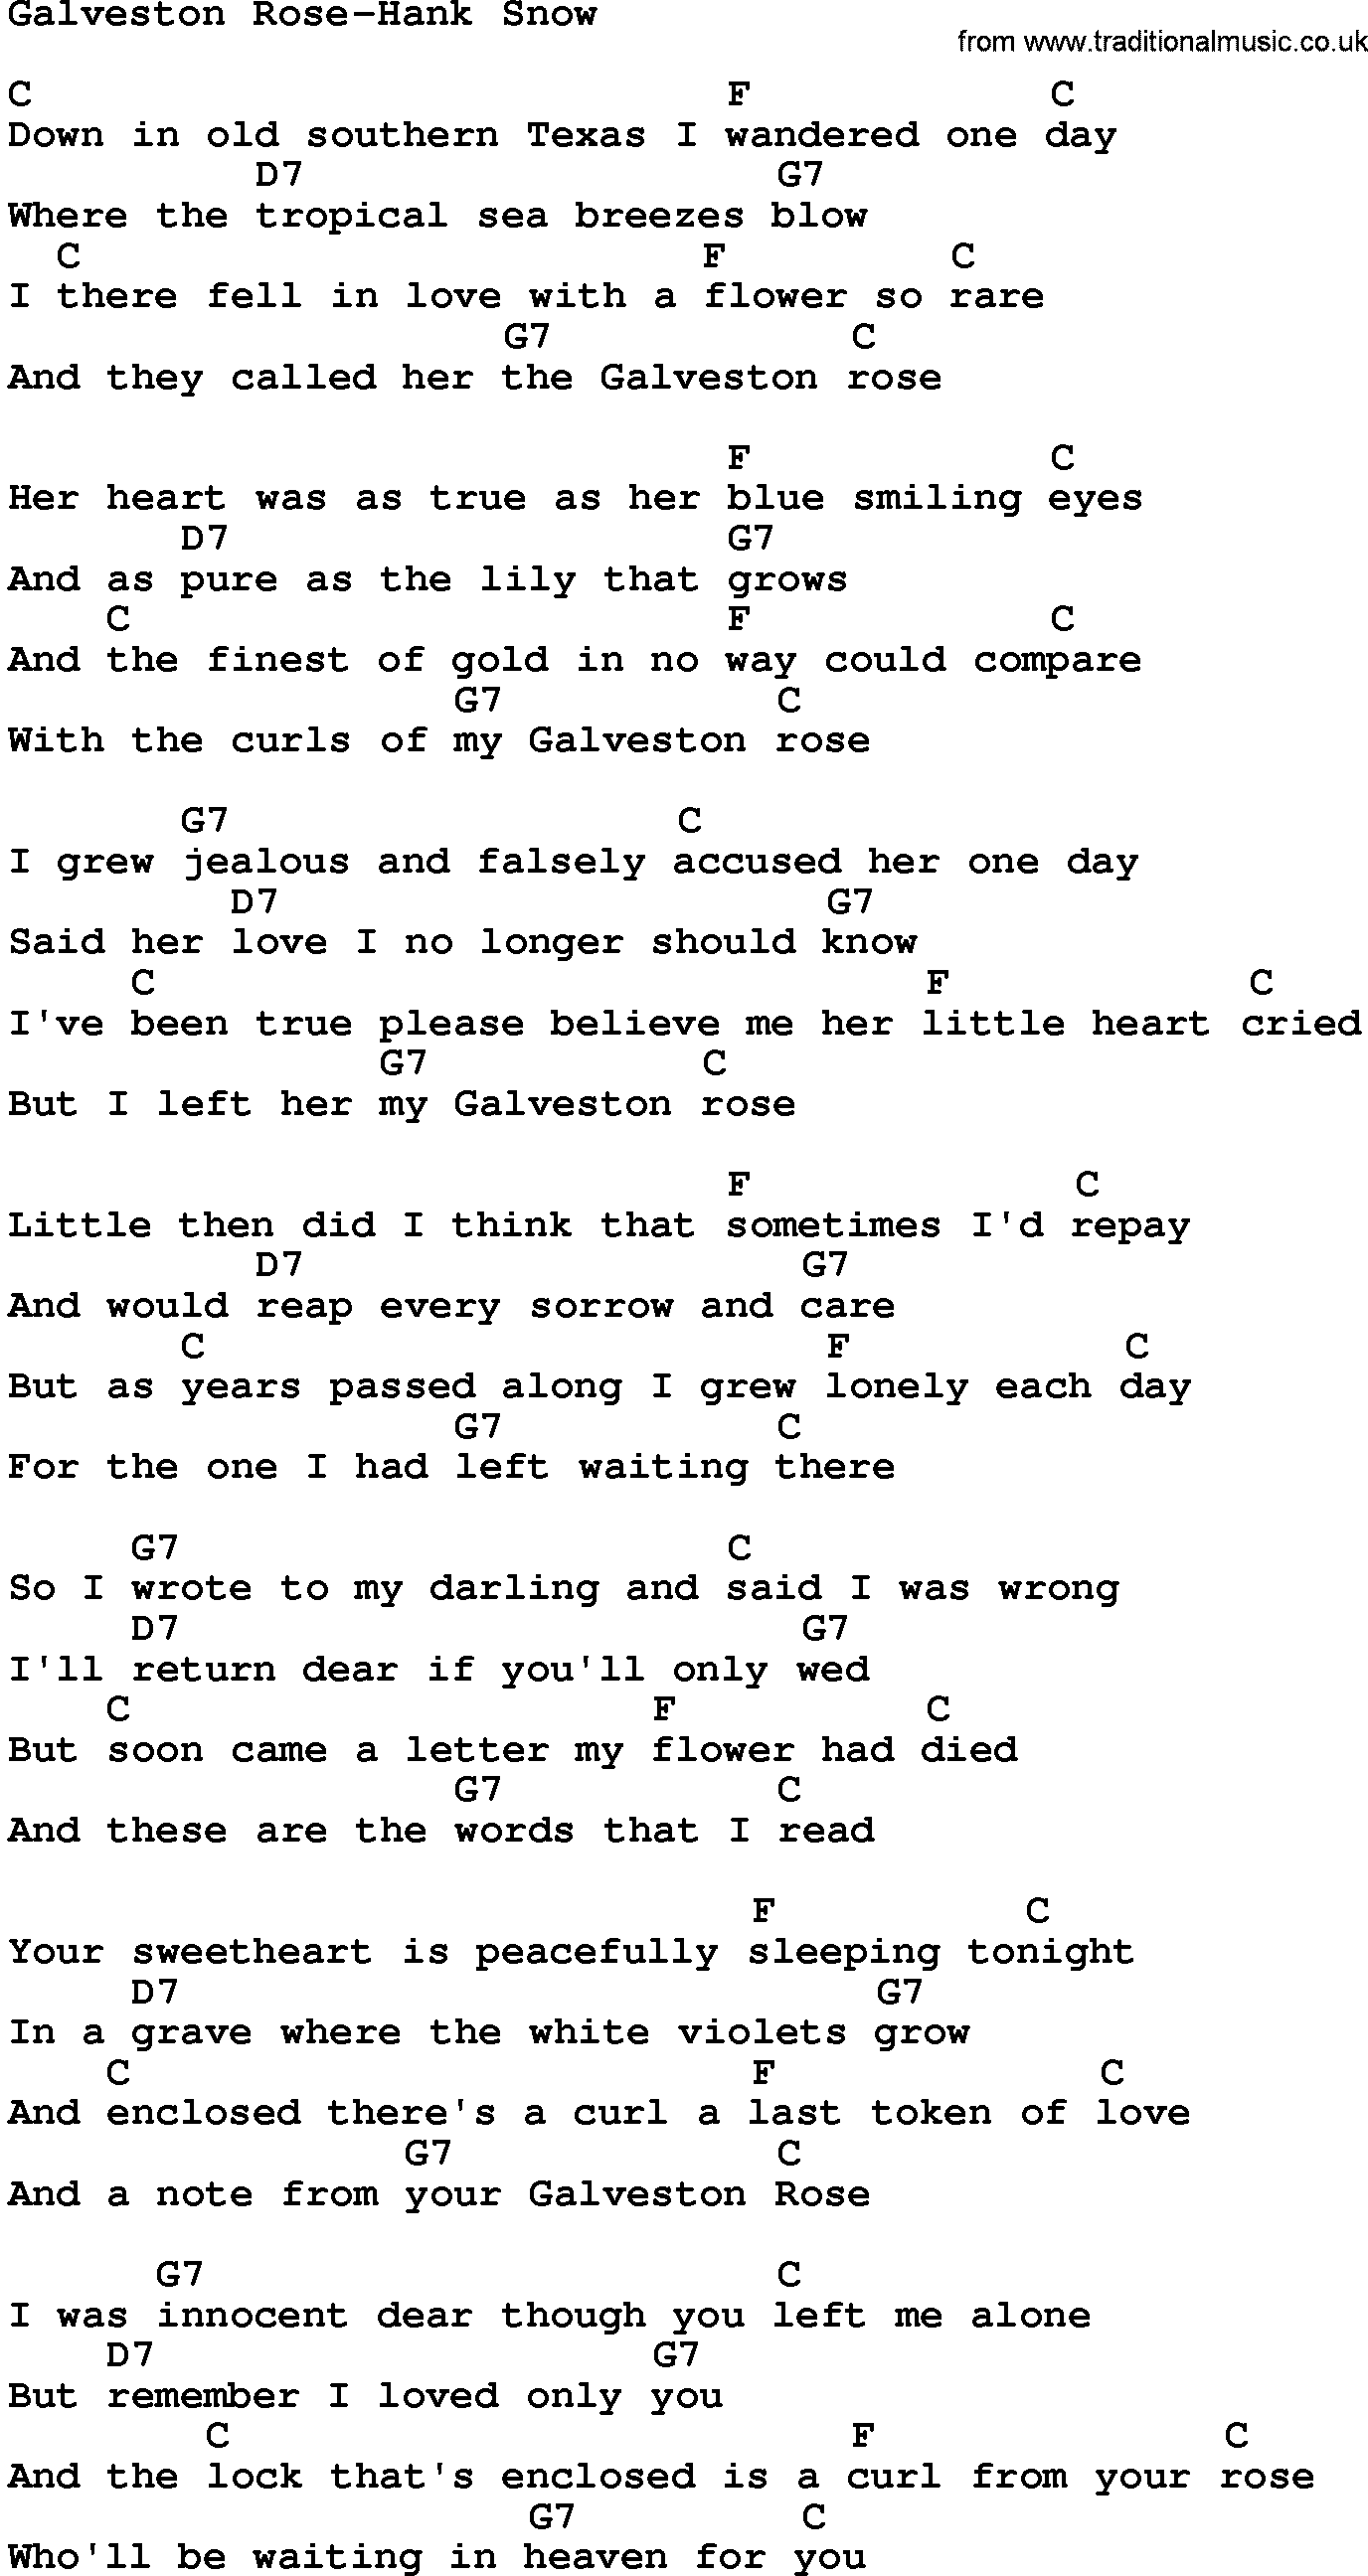 Country music song: Galveston Rose-Hank Snow lyrics and chords